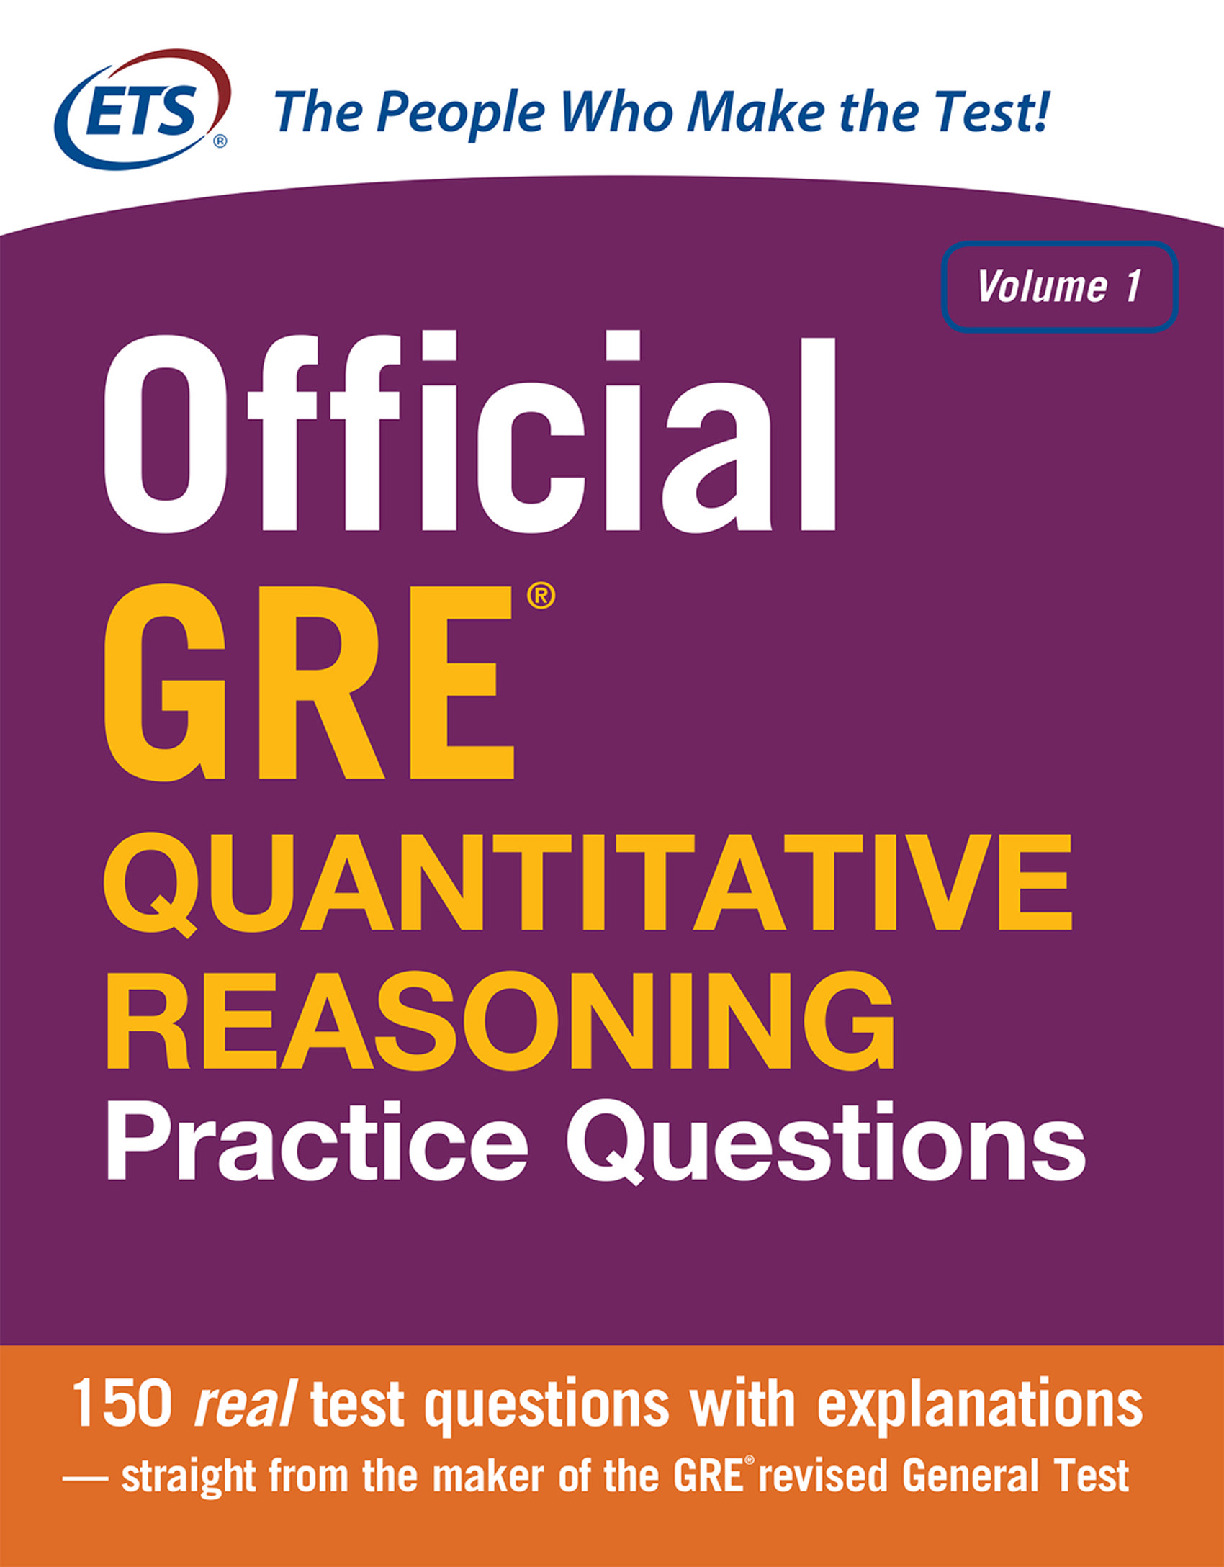 ETS-GRE Quantitative Reasoning